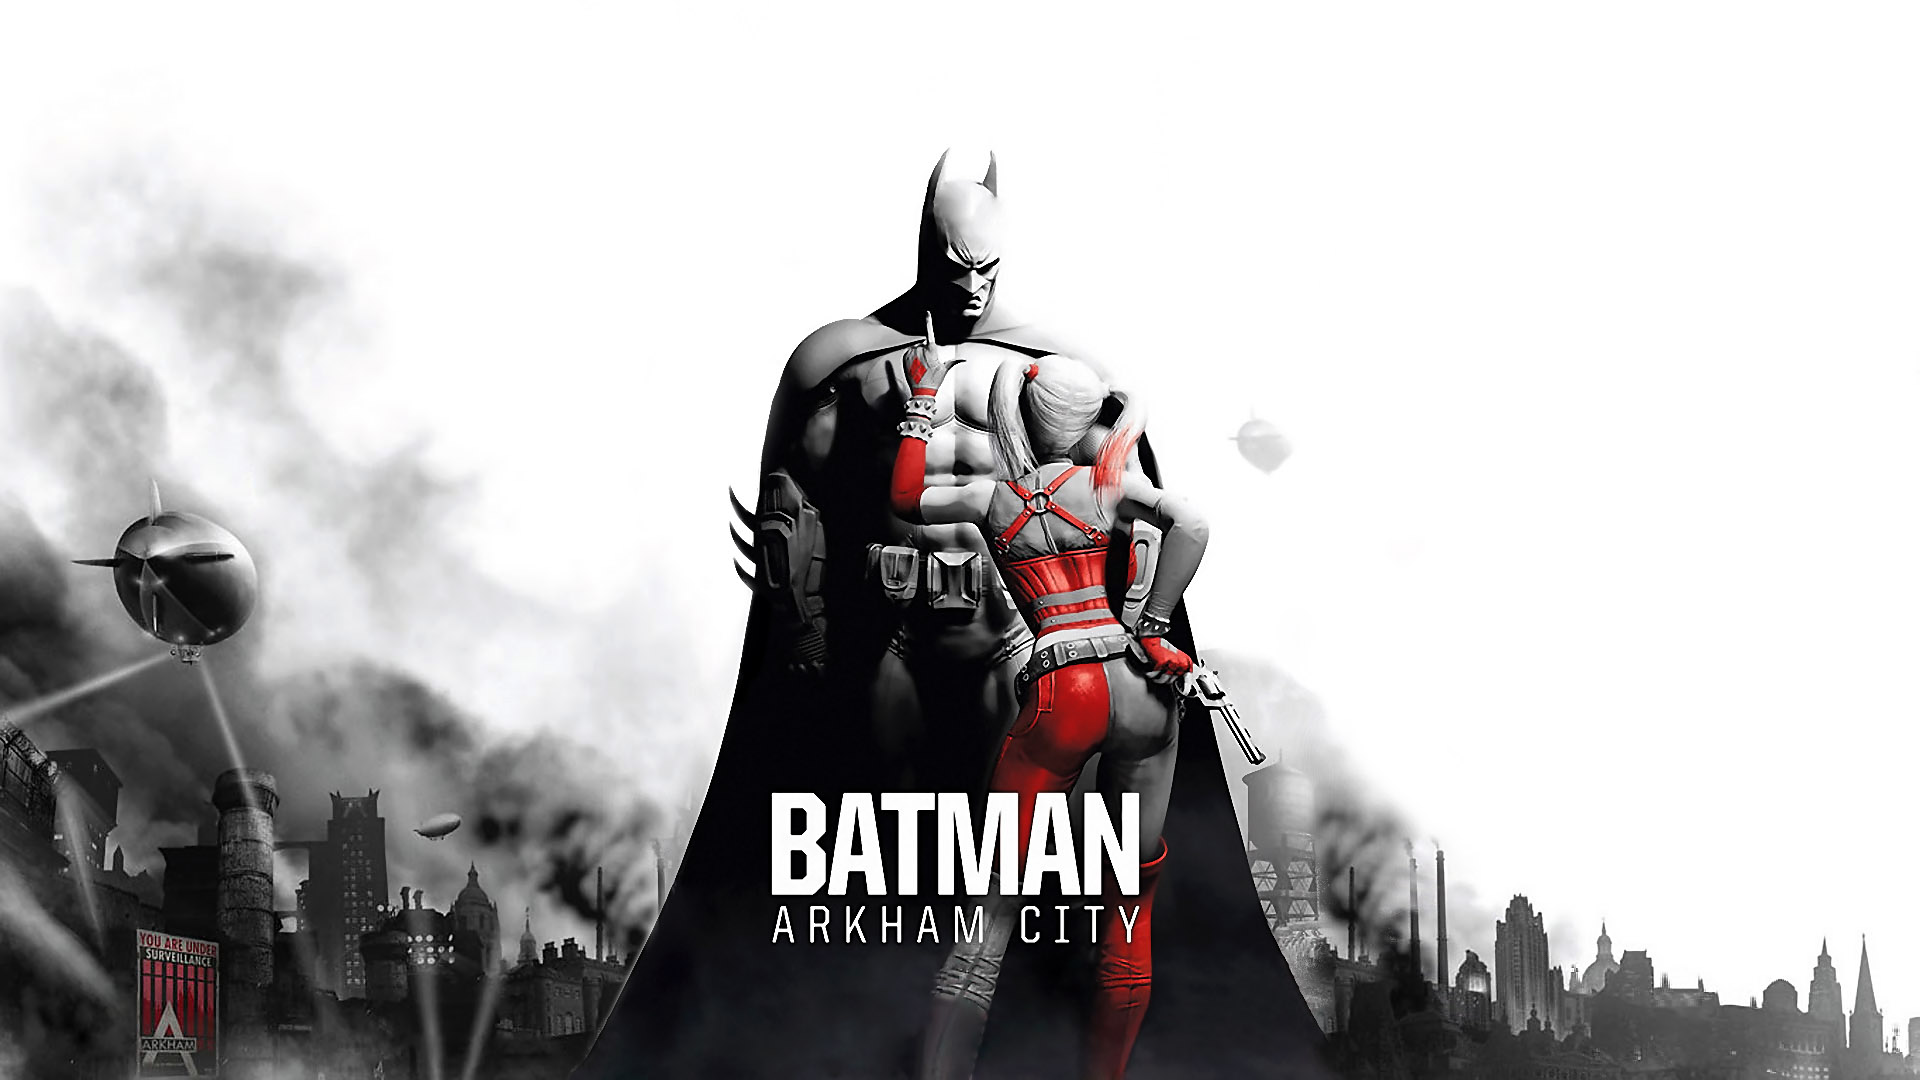 B.A.C desktop wallpaper featuring Batman in Arkham City video game.